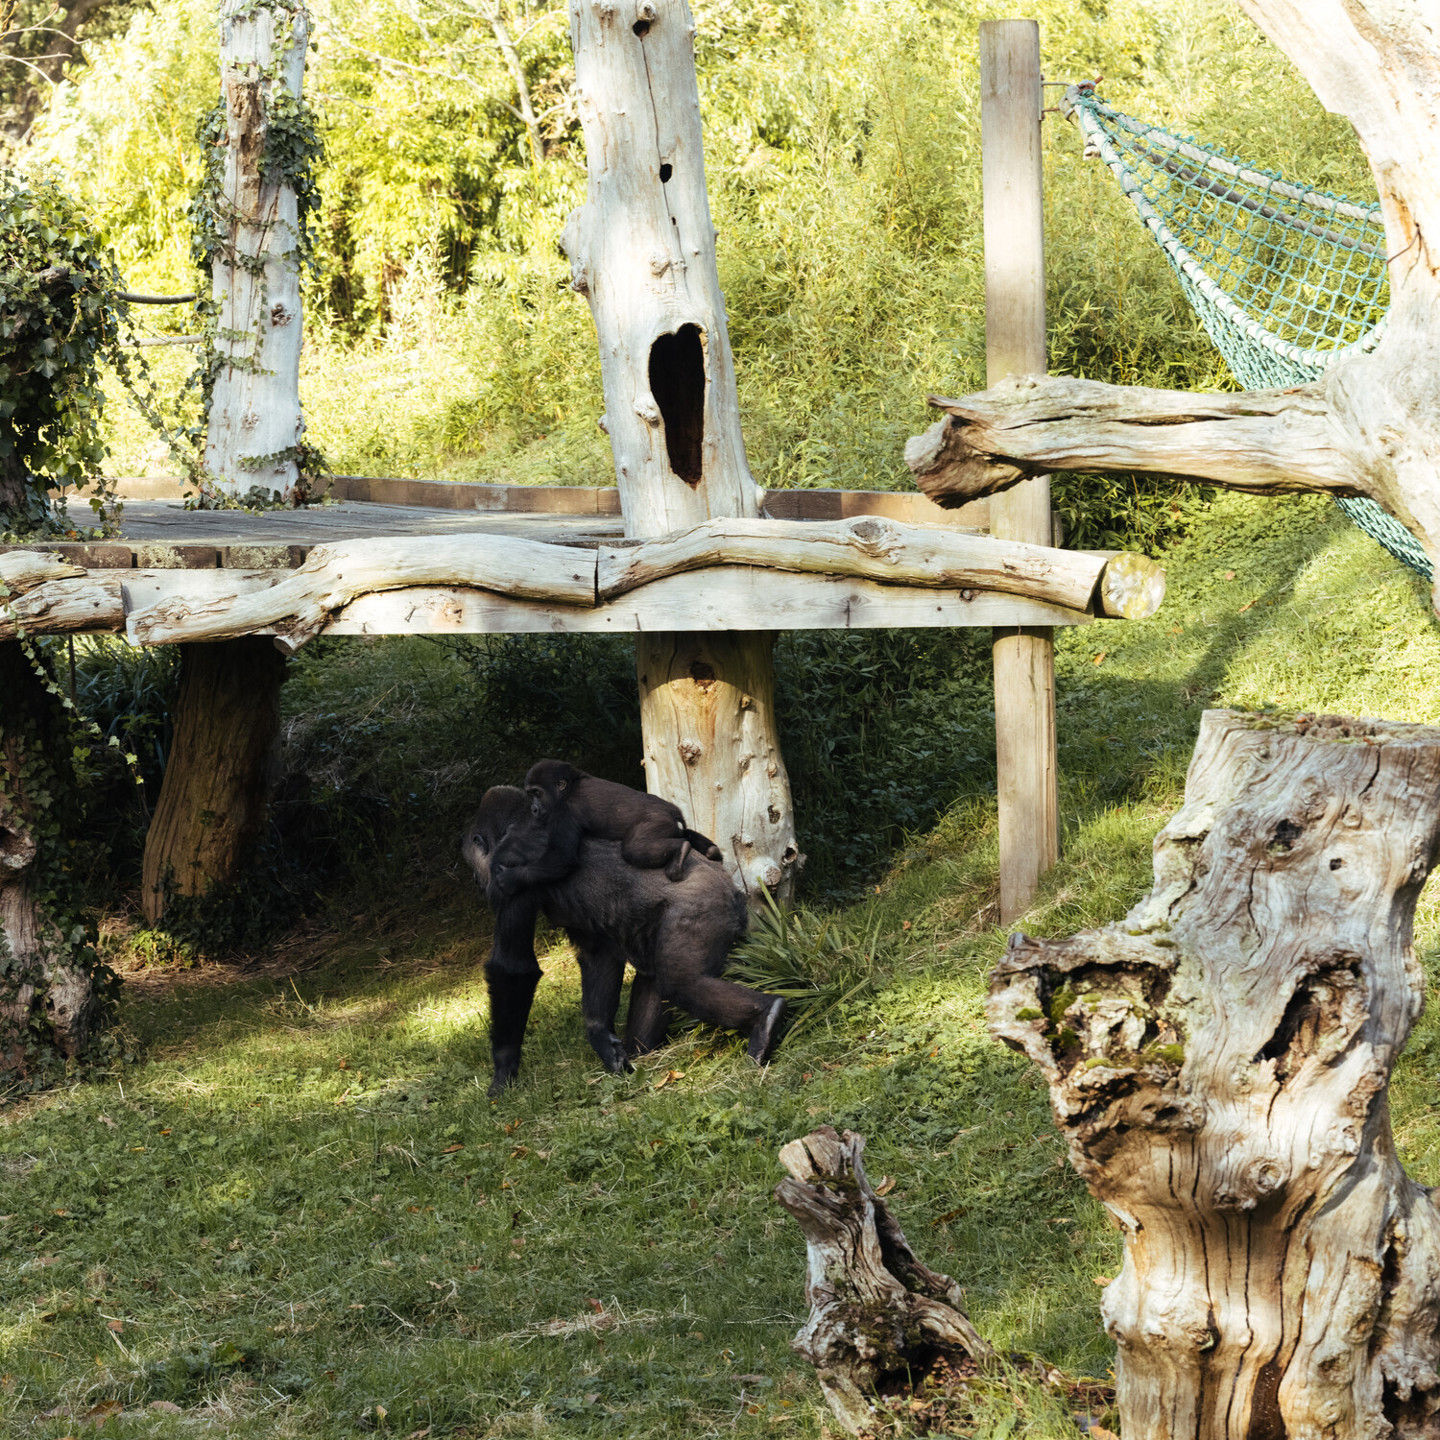 Gorillas at Durrell Zoo